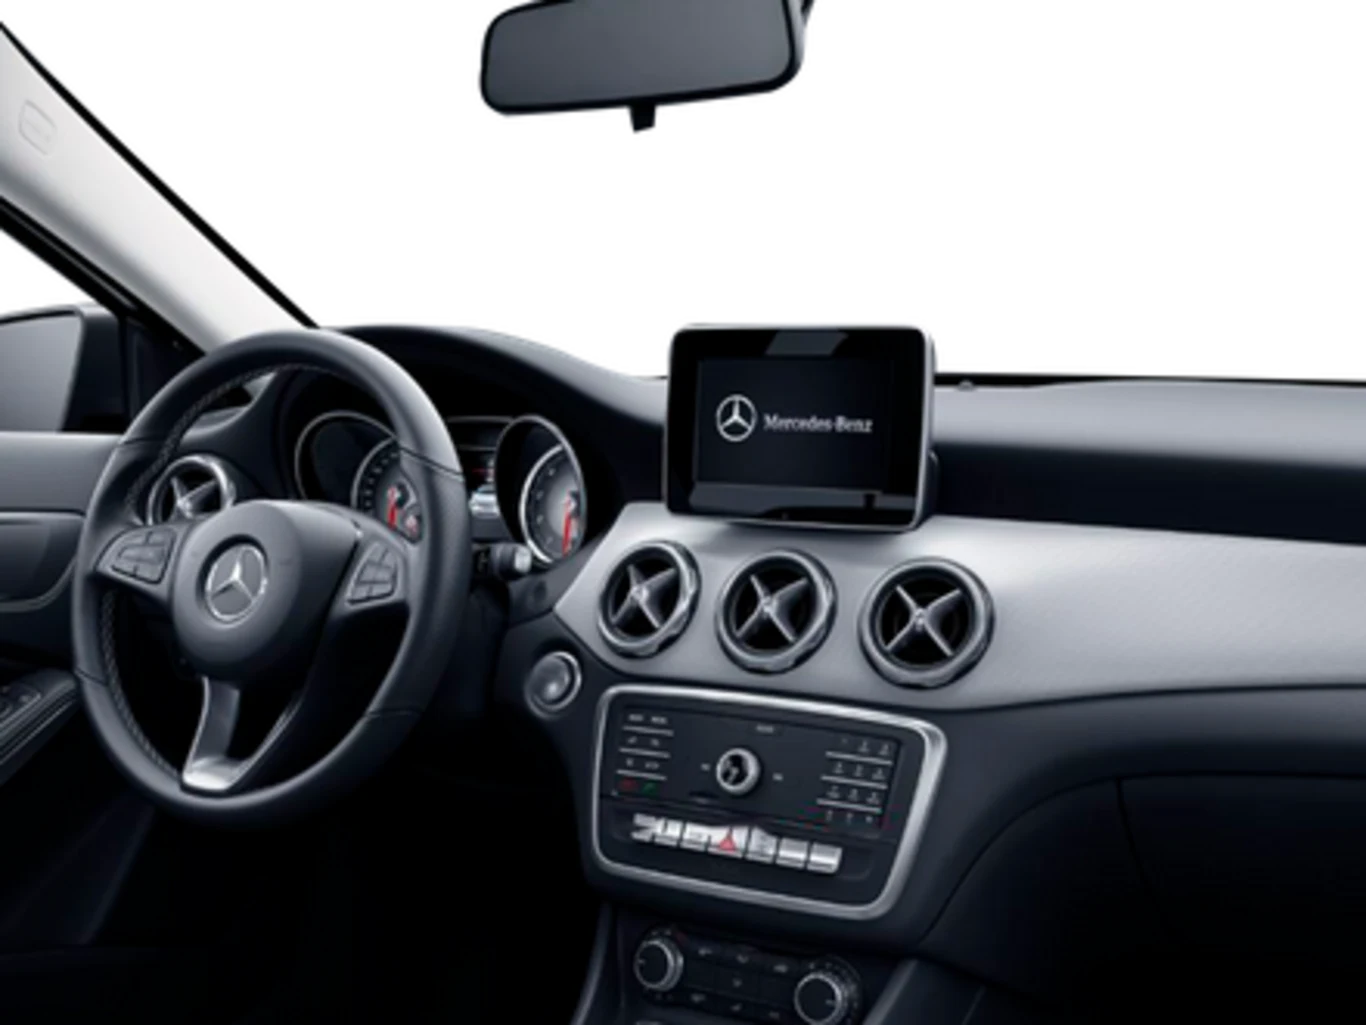 Mercedes-Benz GLA 200 Style 1.6 Turbo (Aut)